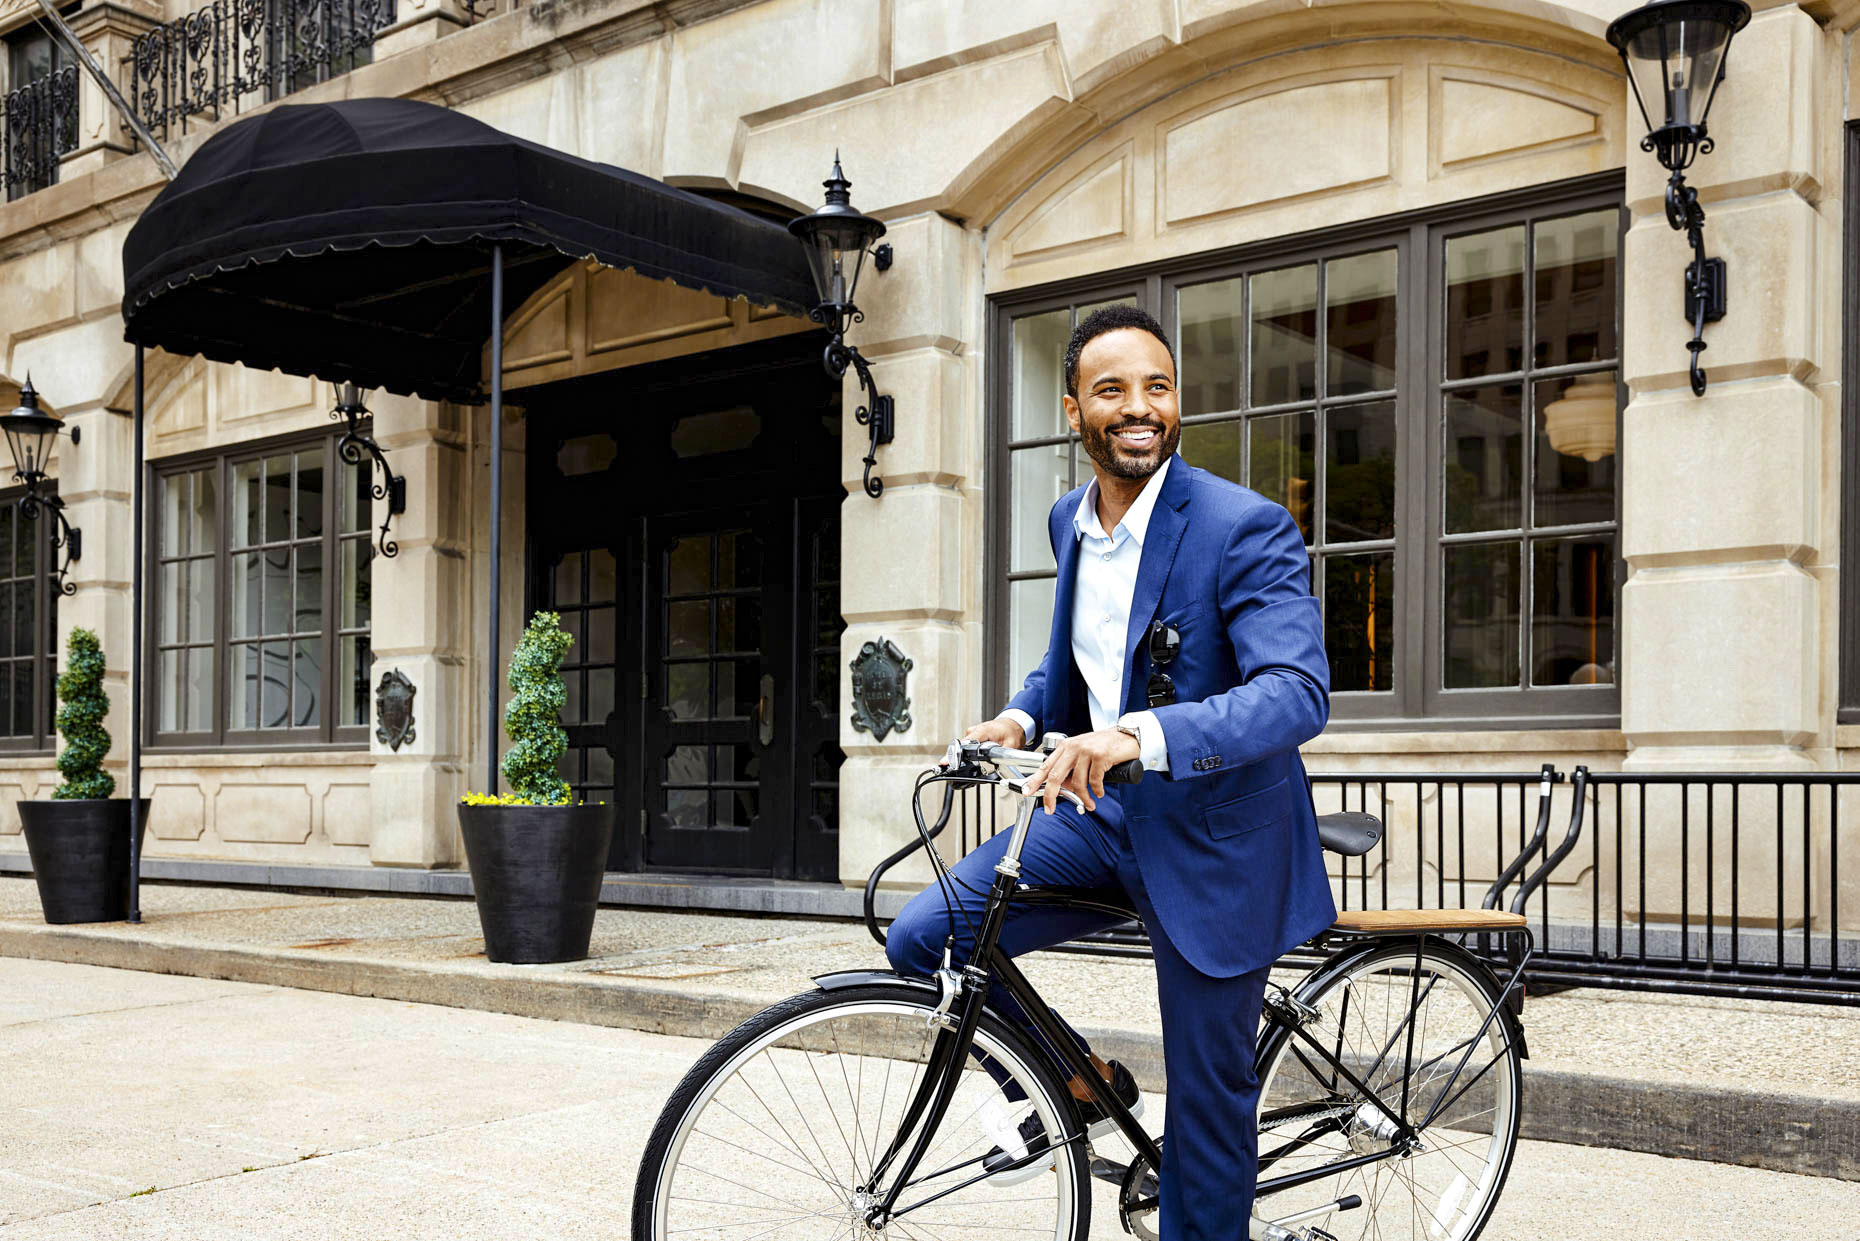 Portrait of stylish man smiling on bike in urban setting